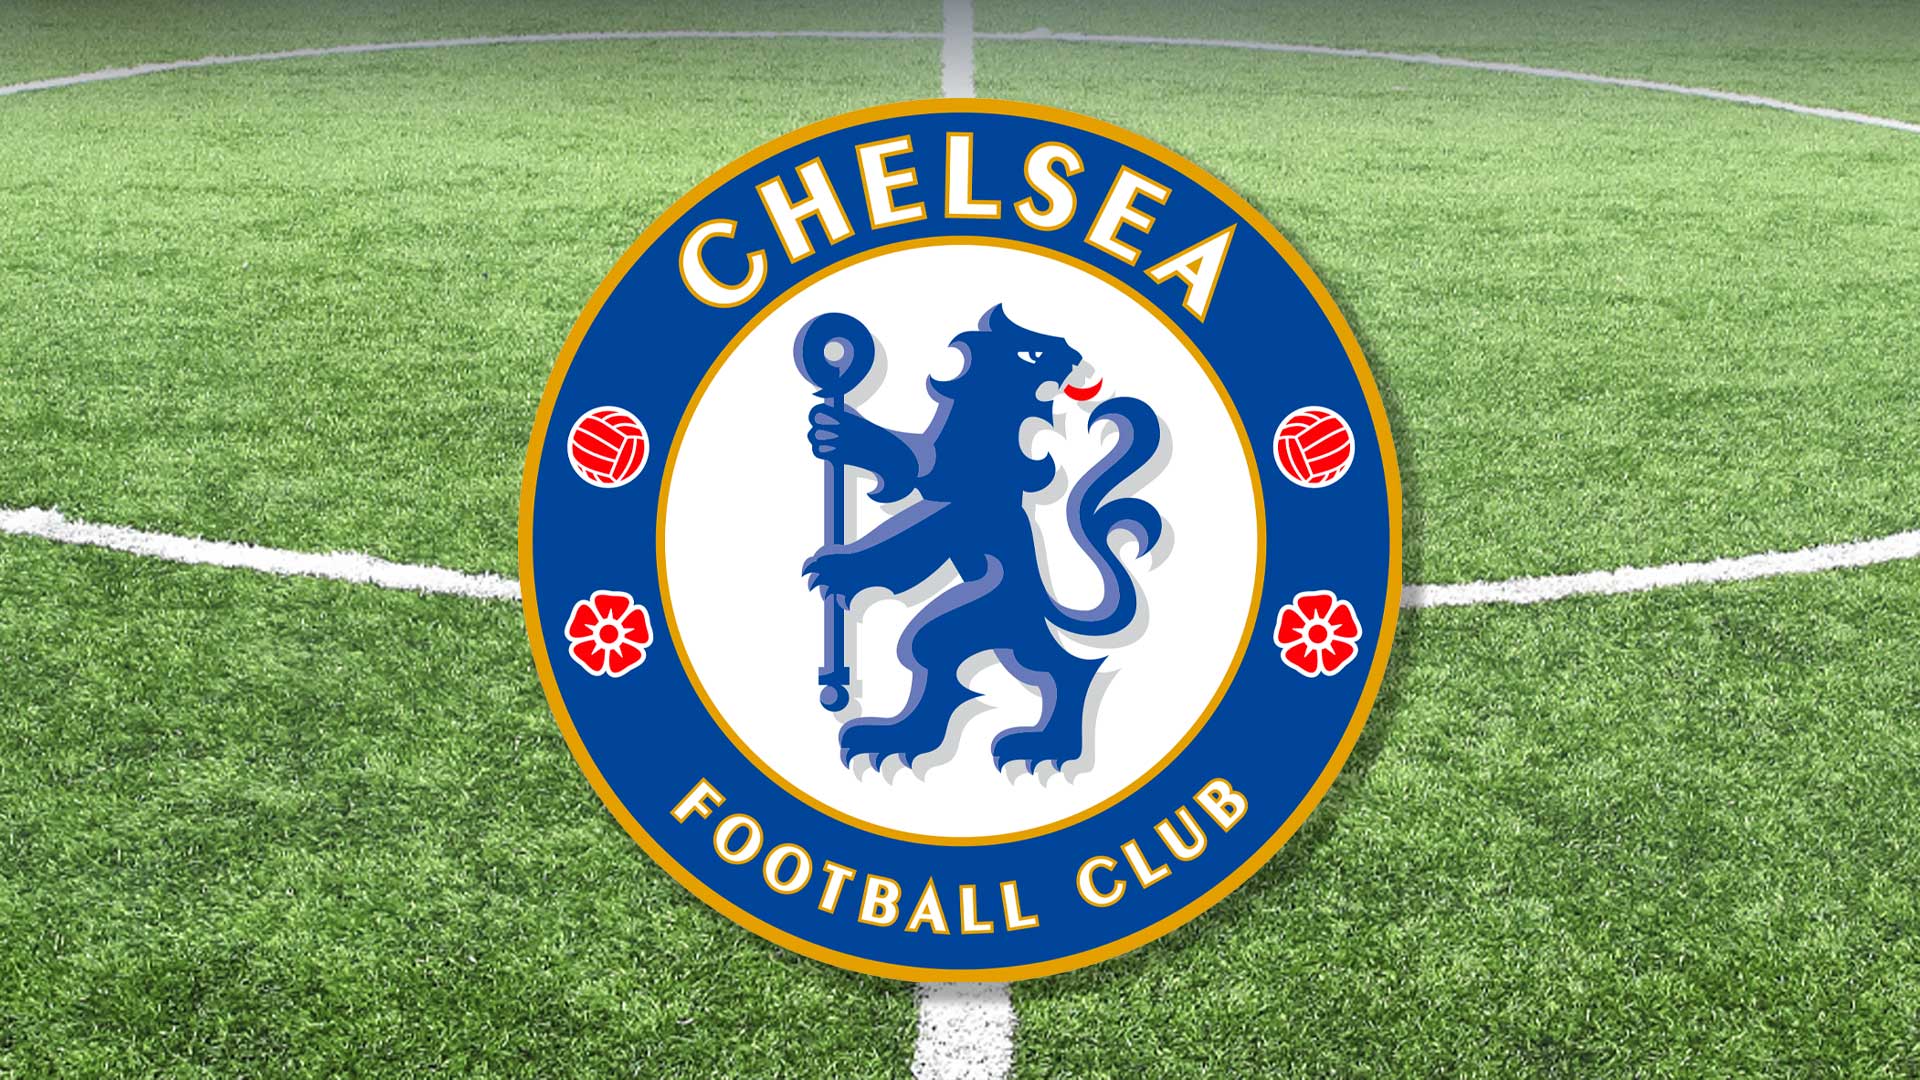 Chelsea club badge